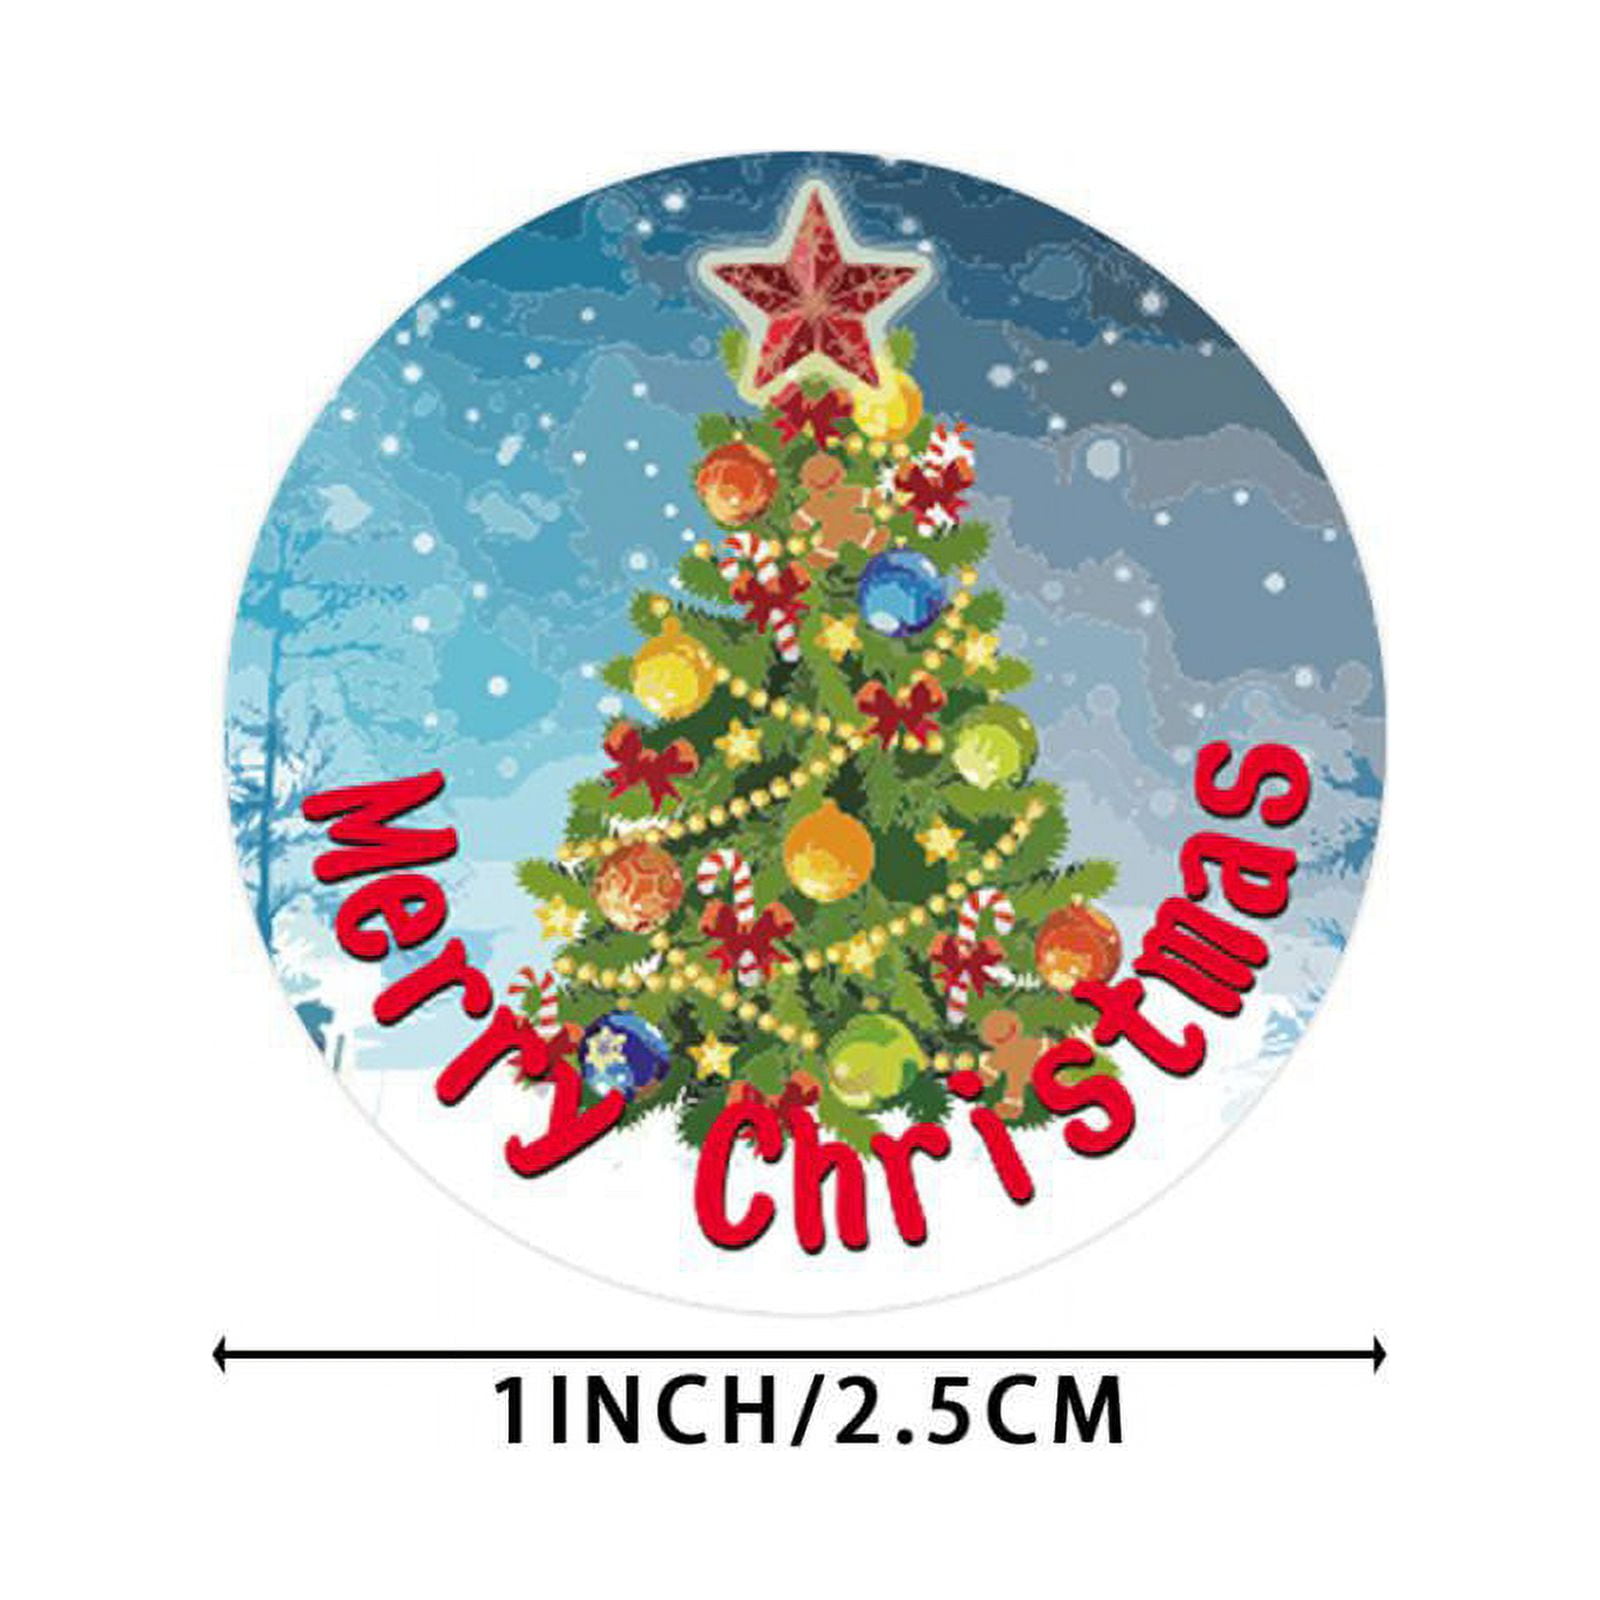 Happy Holidays sticker Sticker for Sale by 111asma